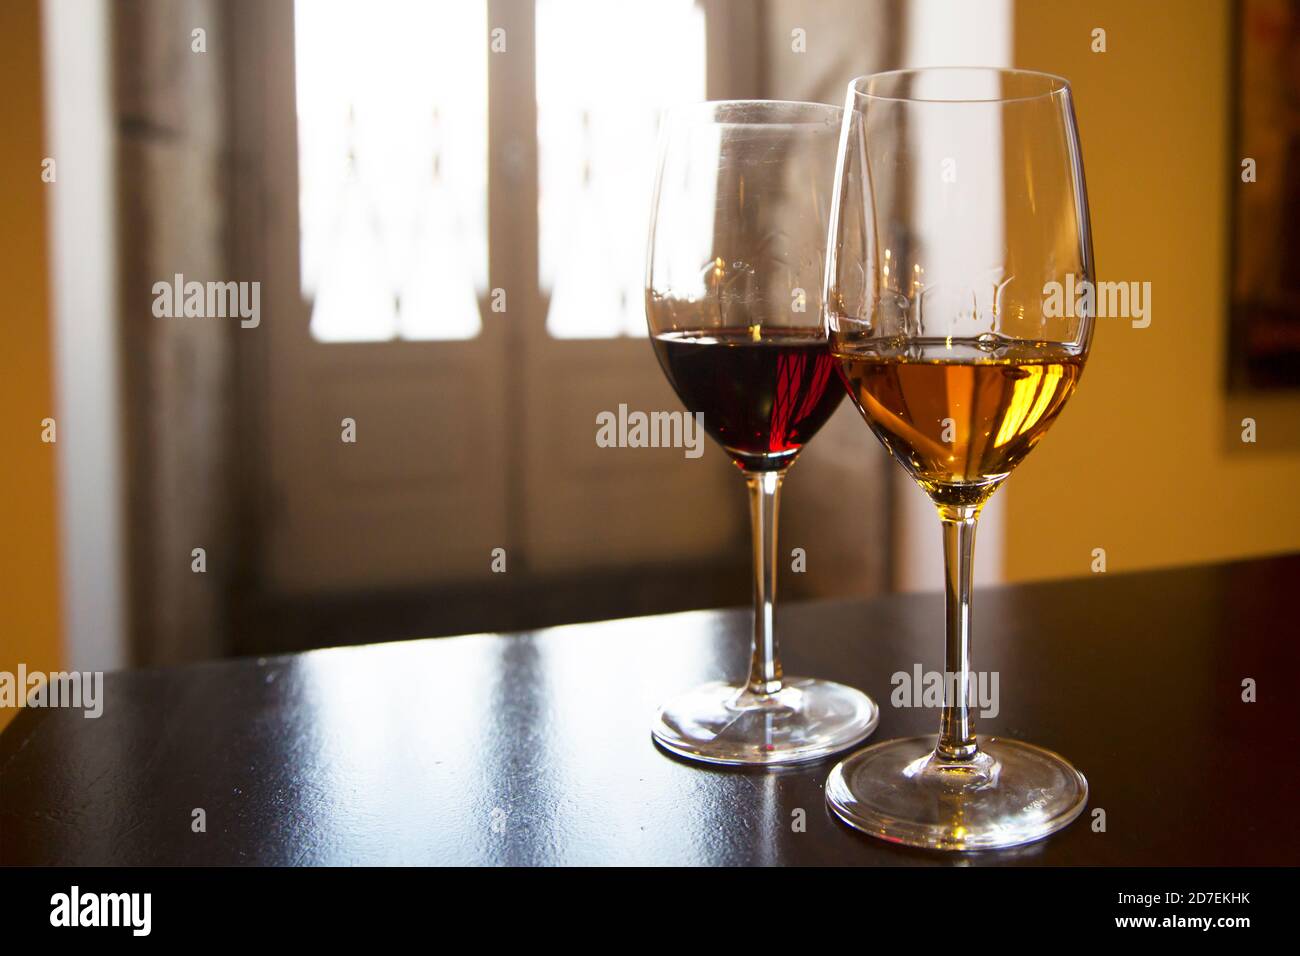 https://c8.alamy.com/comp/2D7EKHK/two-glasses-of-port-wine-2D7EKHK.jpg